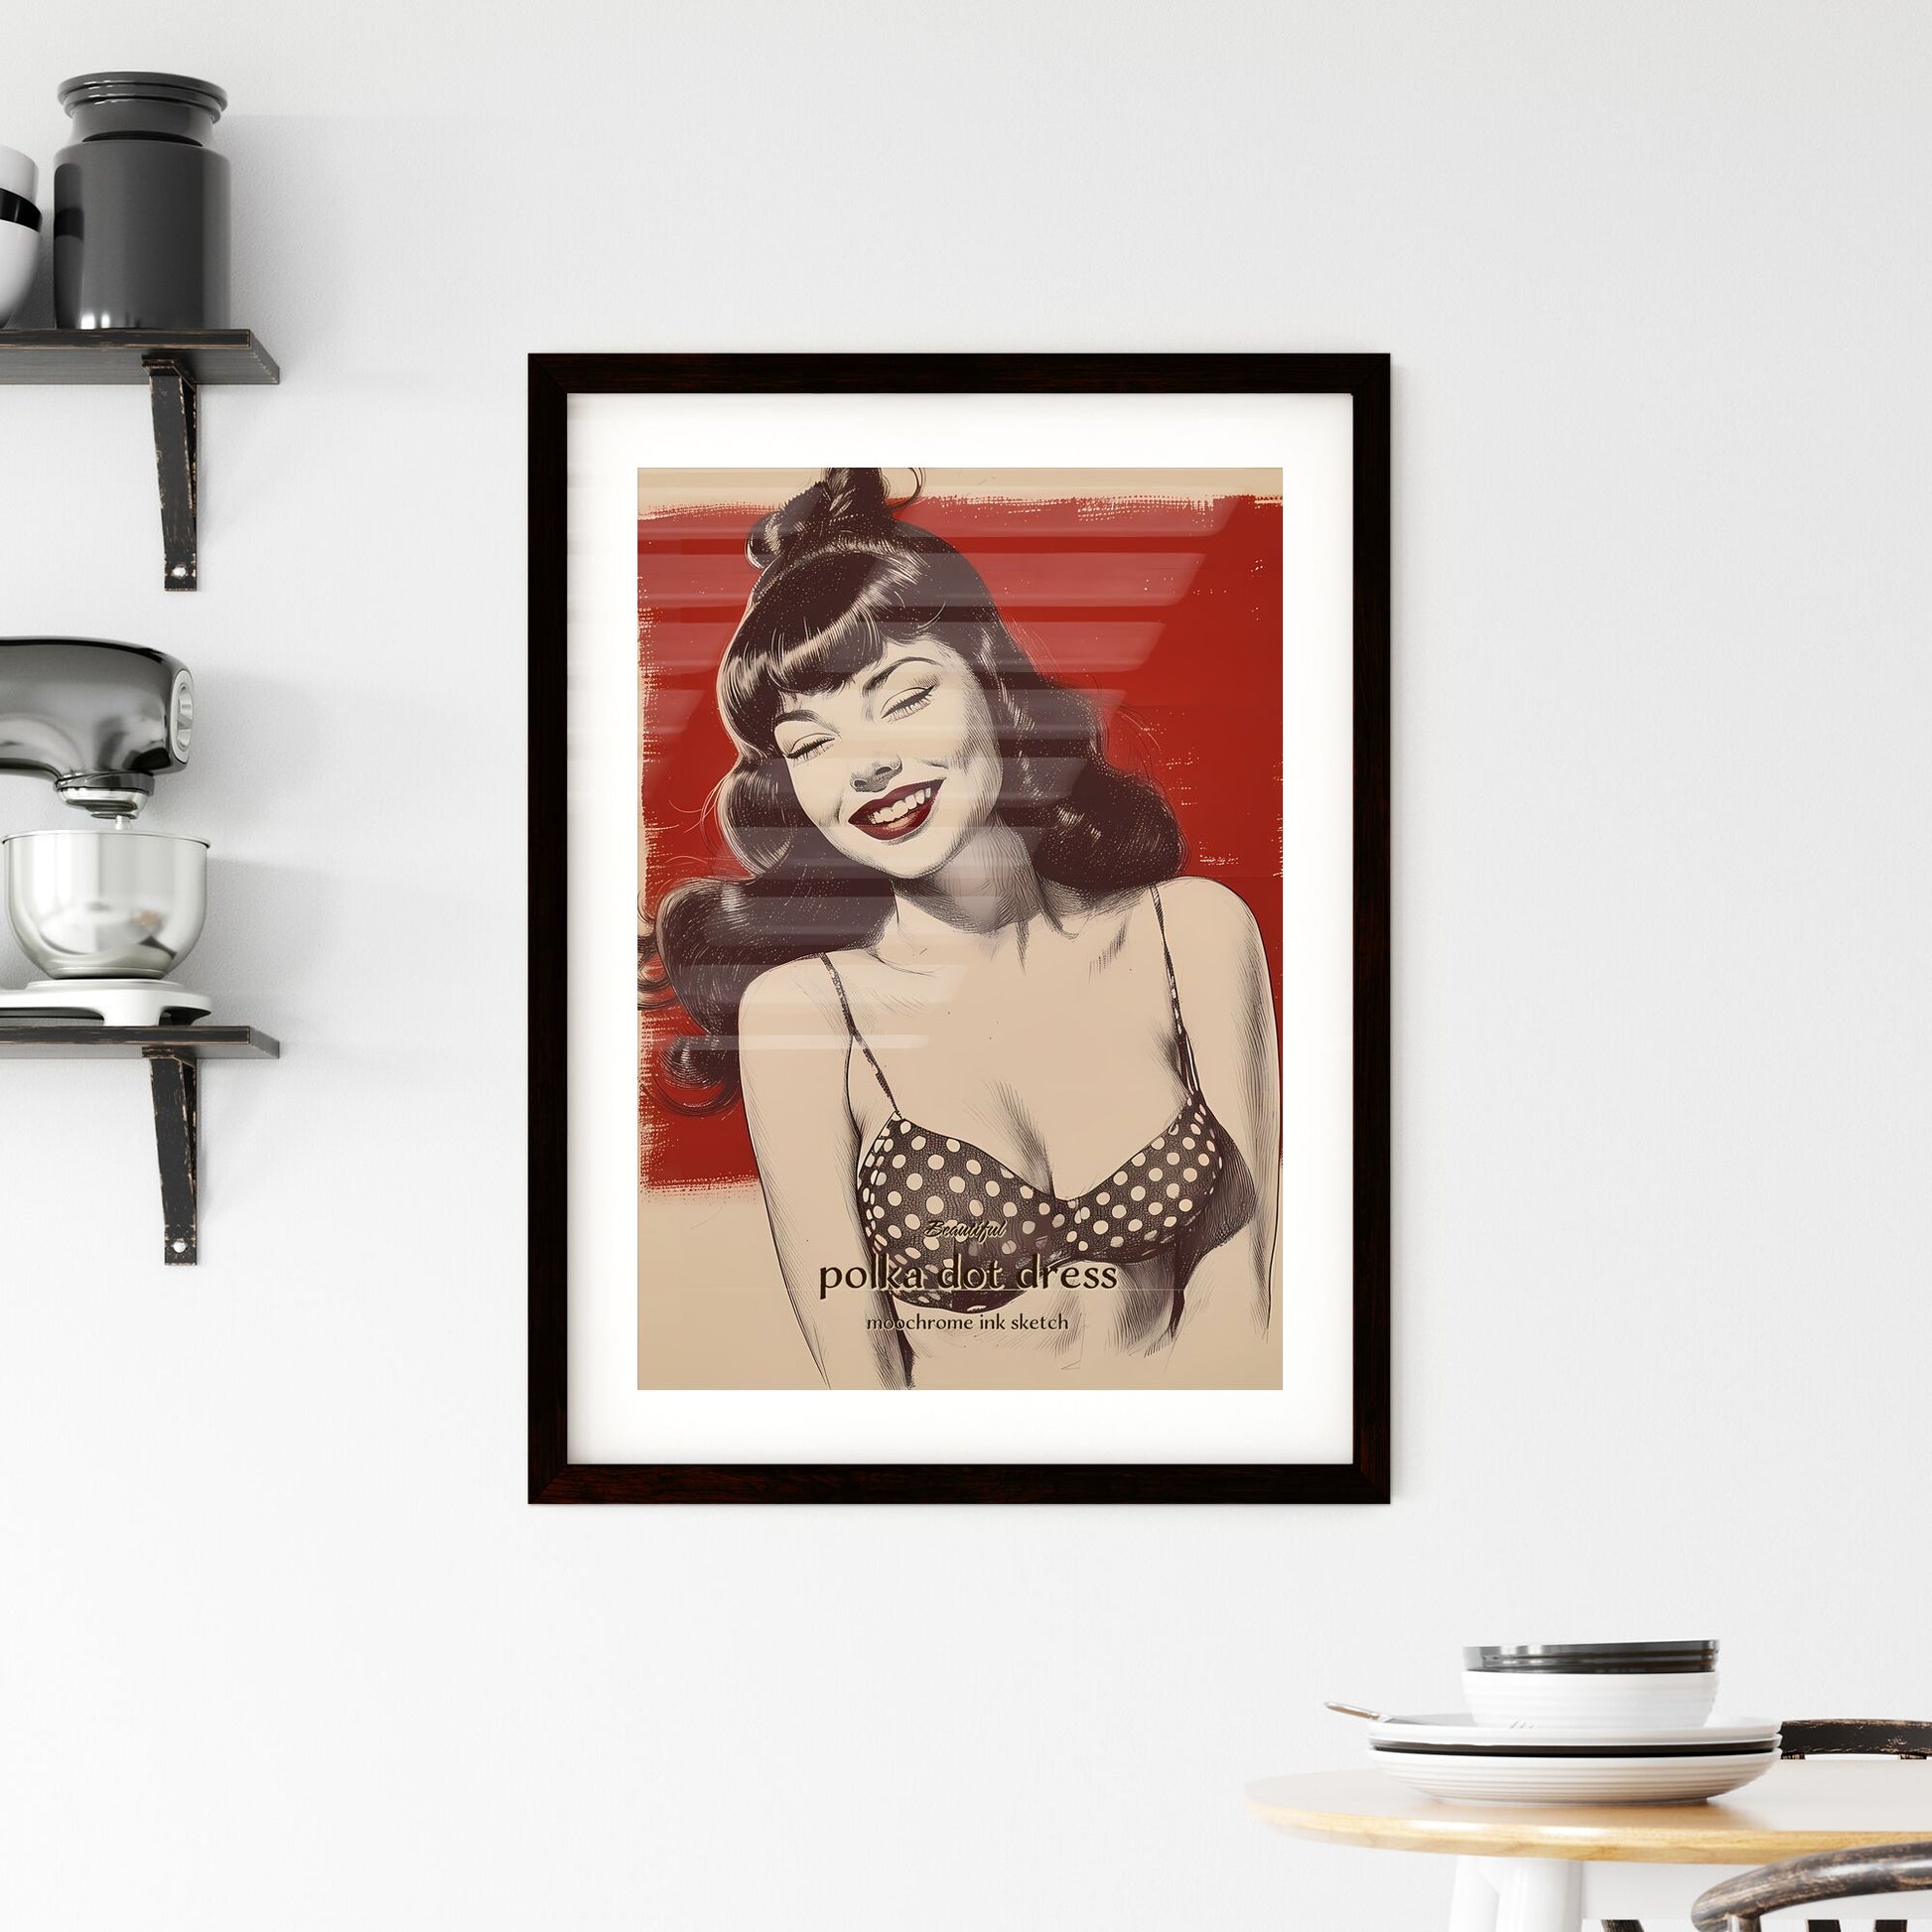 Beautiful, polka dot dress, moochrome ink sketch, A Poster of a woman in a garment Default Title